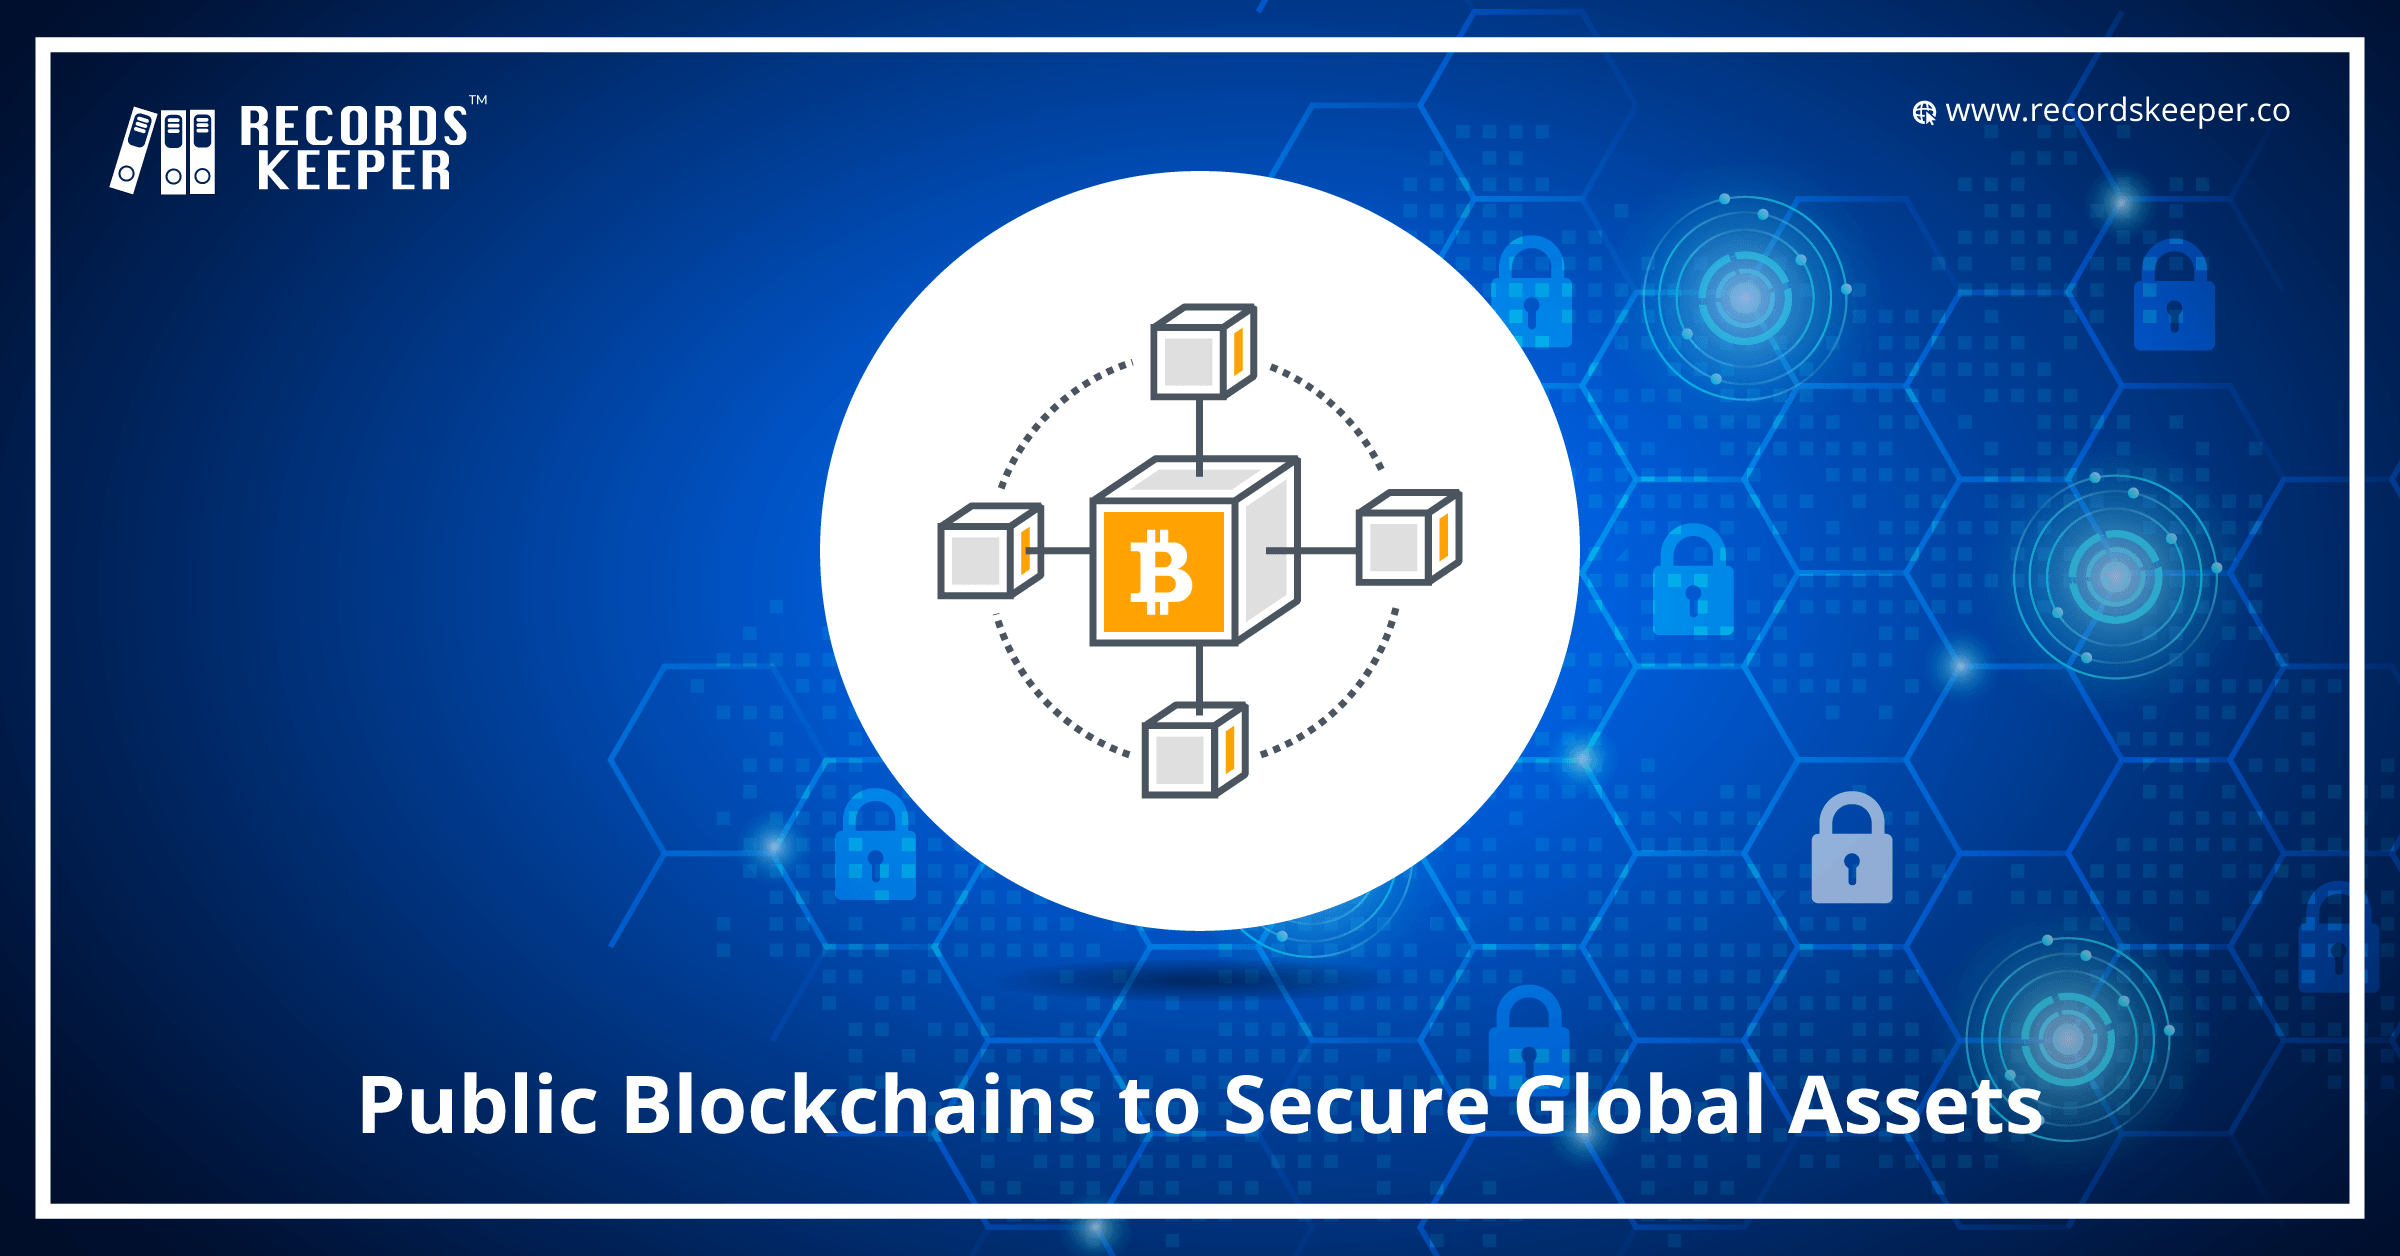 Public Blockchains to secure Global Assets